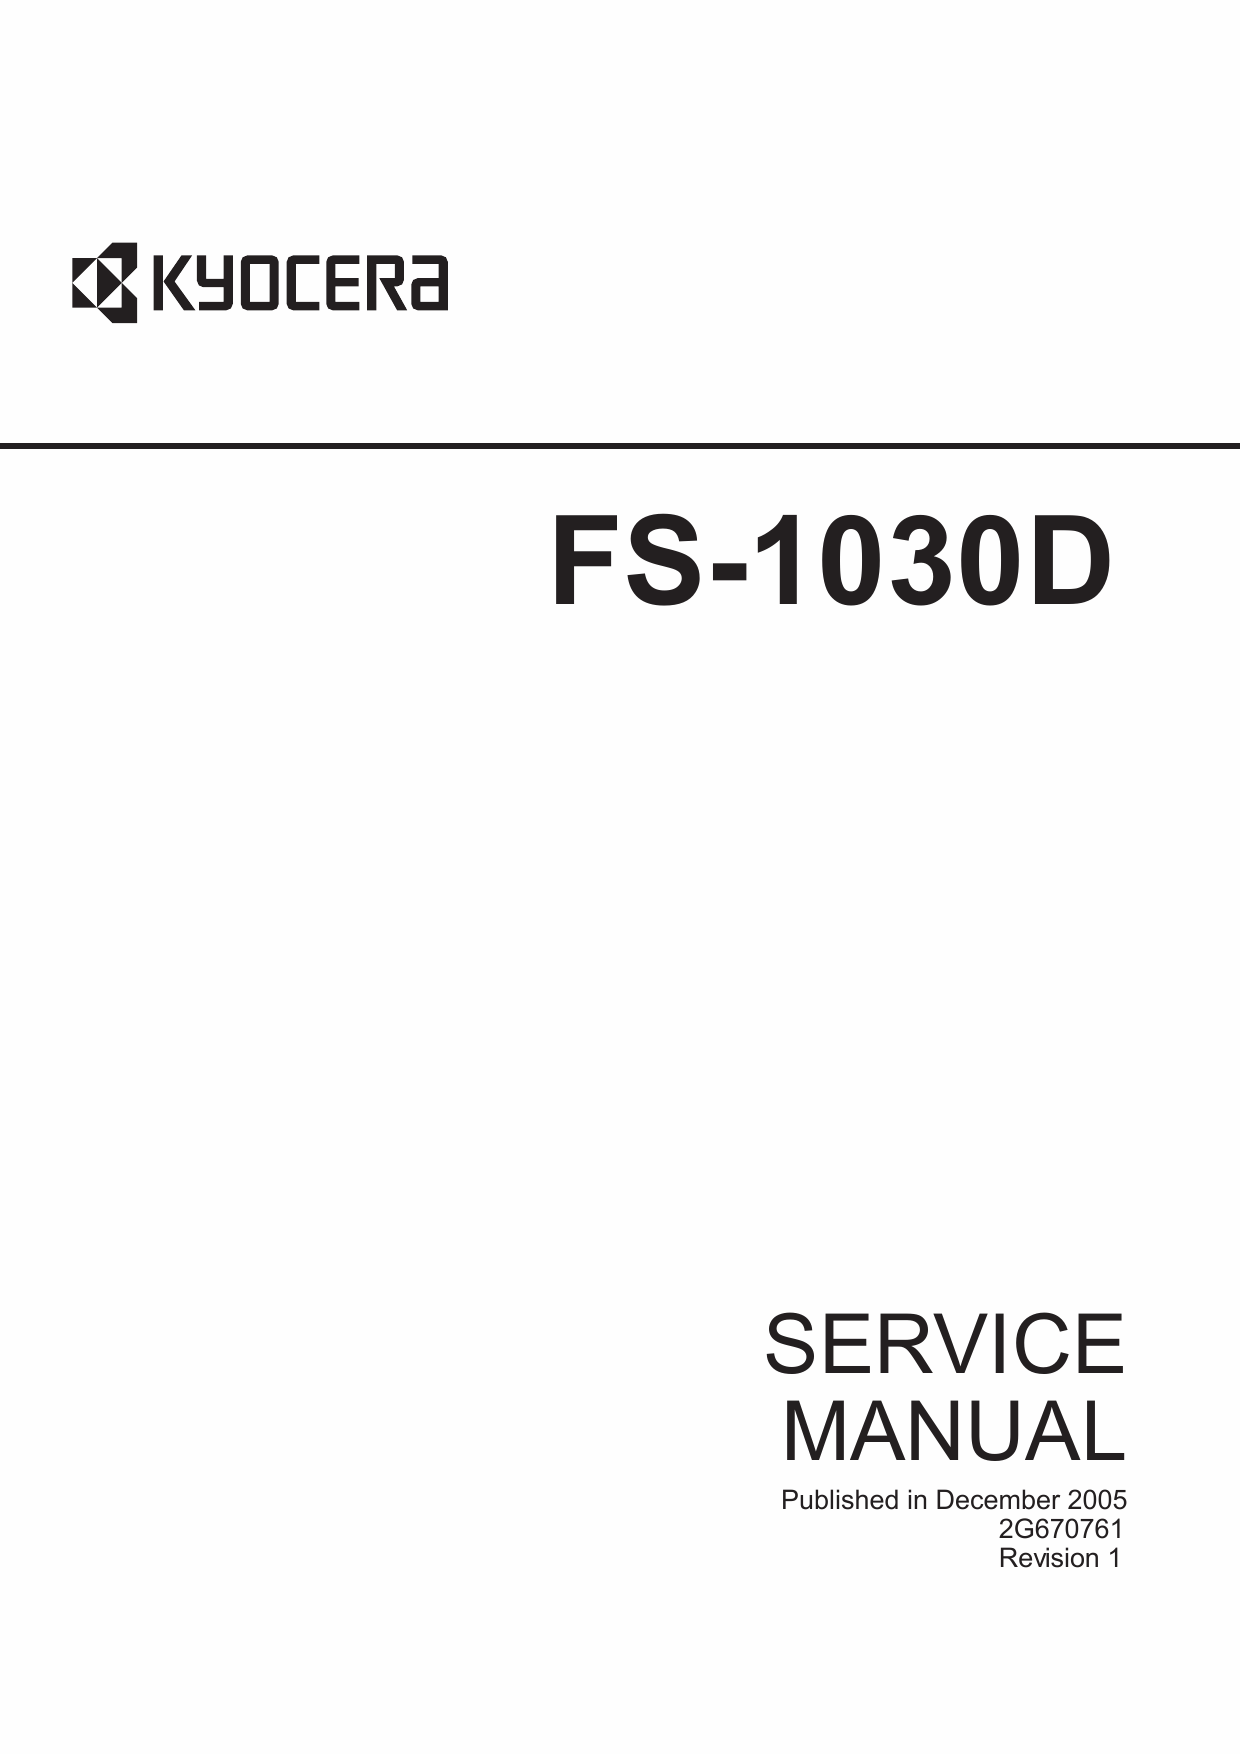 Kyocera service manual. Kyocera 1030d. Kyocera FS-1030d. Куосера FS 4200 сервис мануал. GC-fs42 service manual.